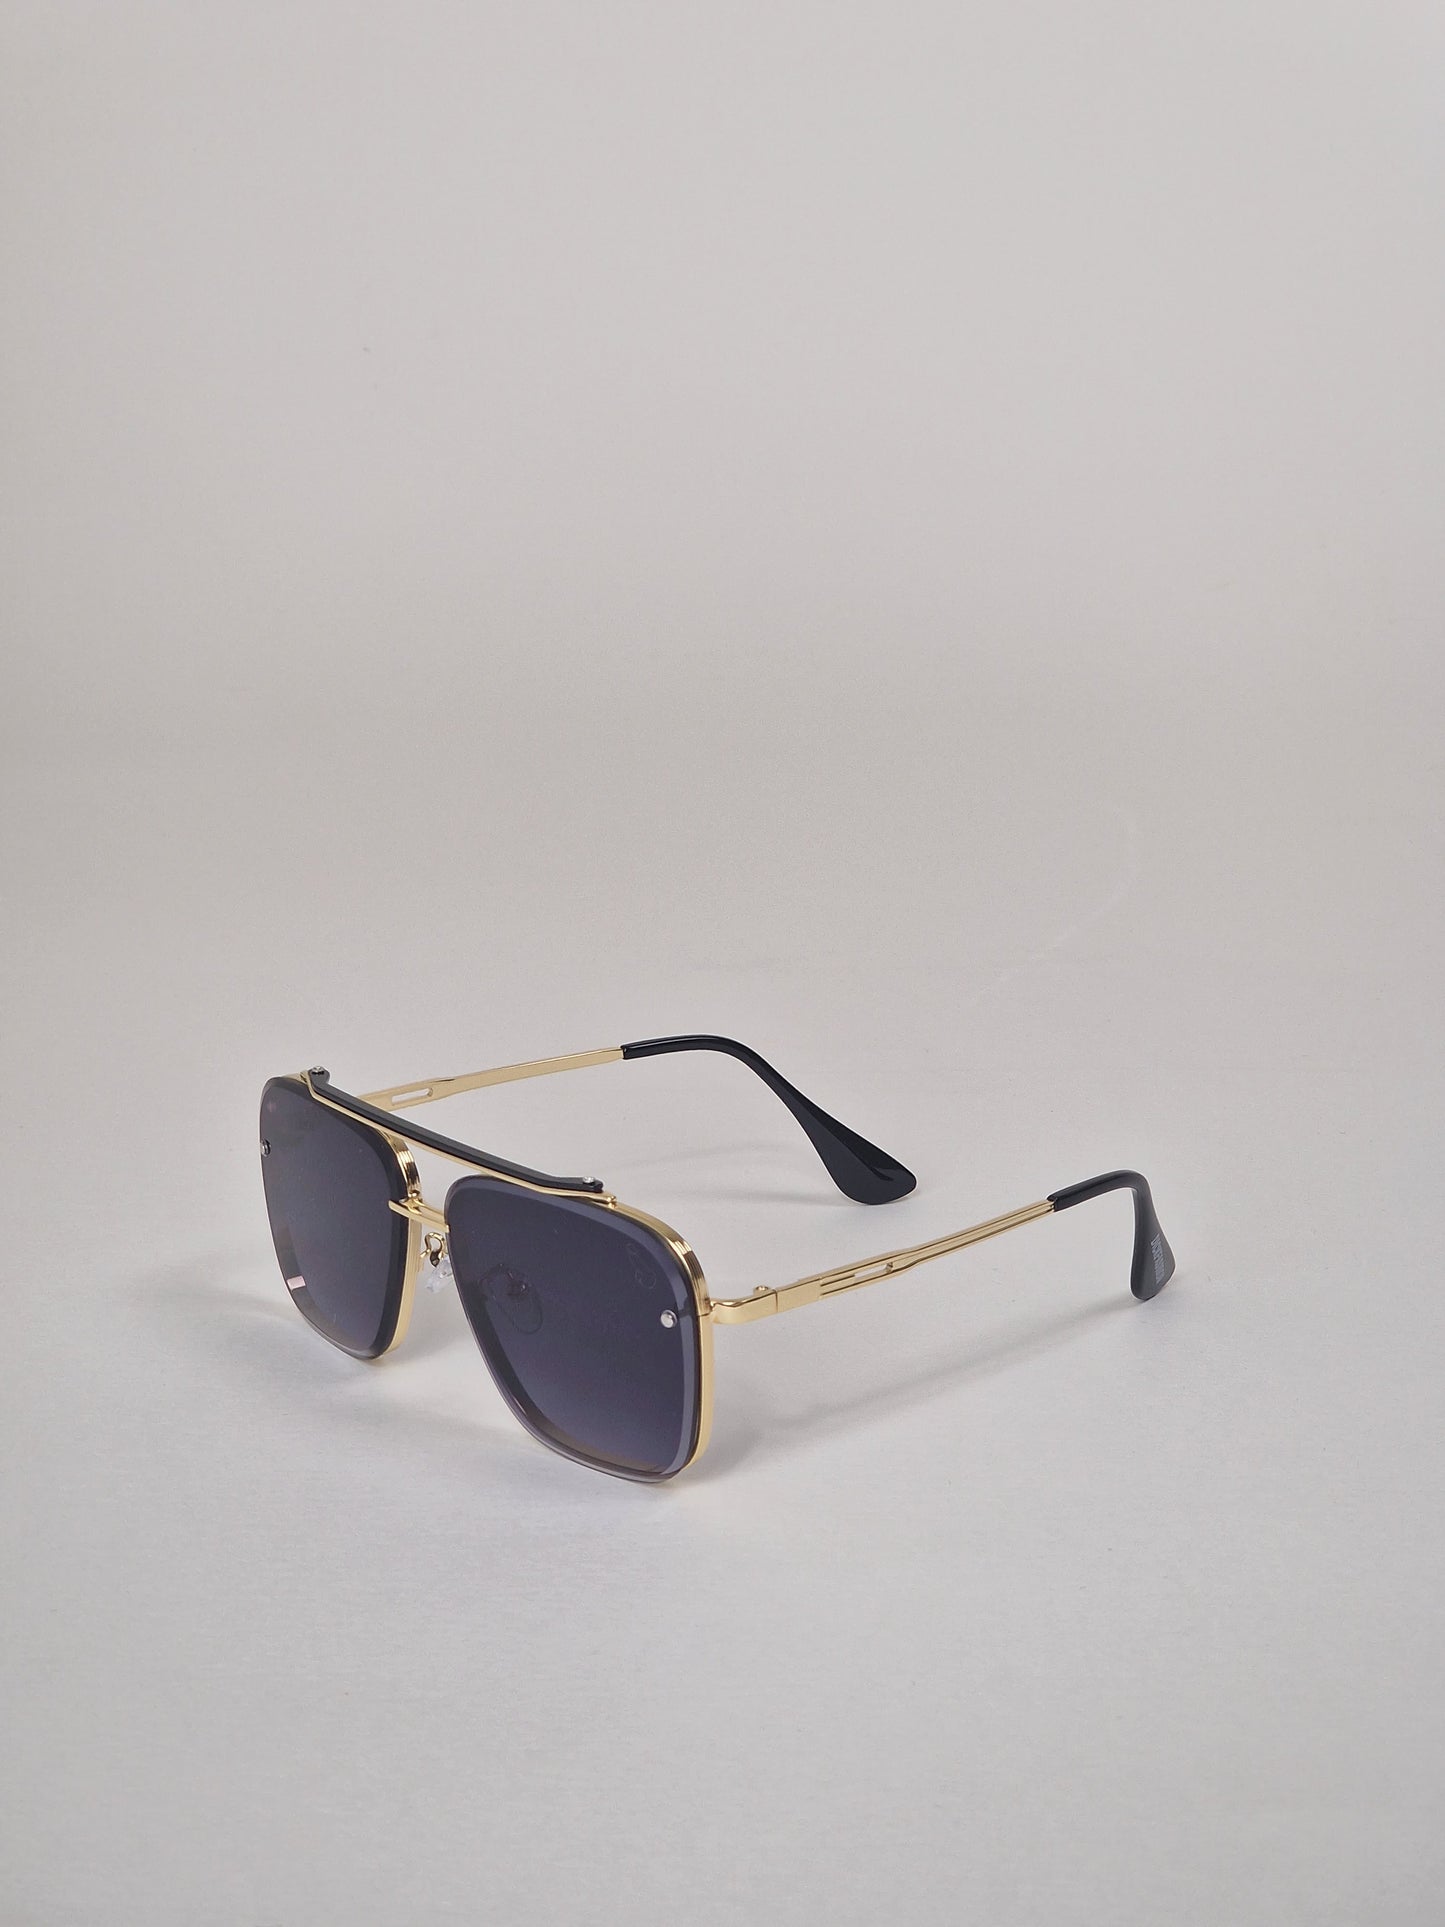 Sunglasses, model 26 - Dark blue tinted.